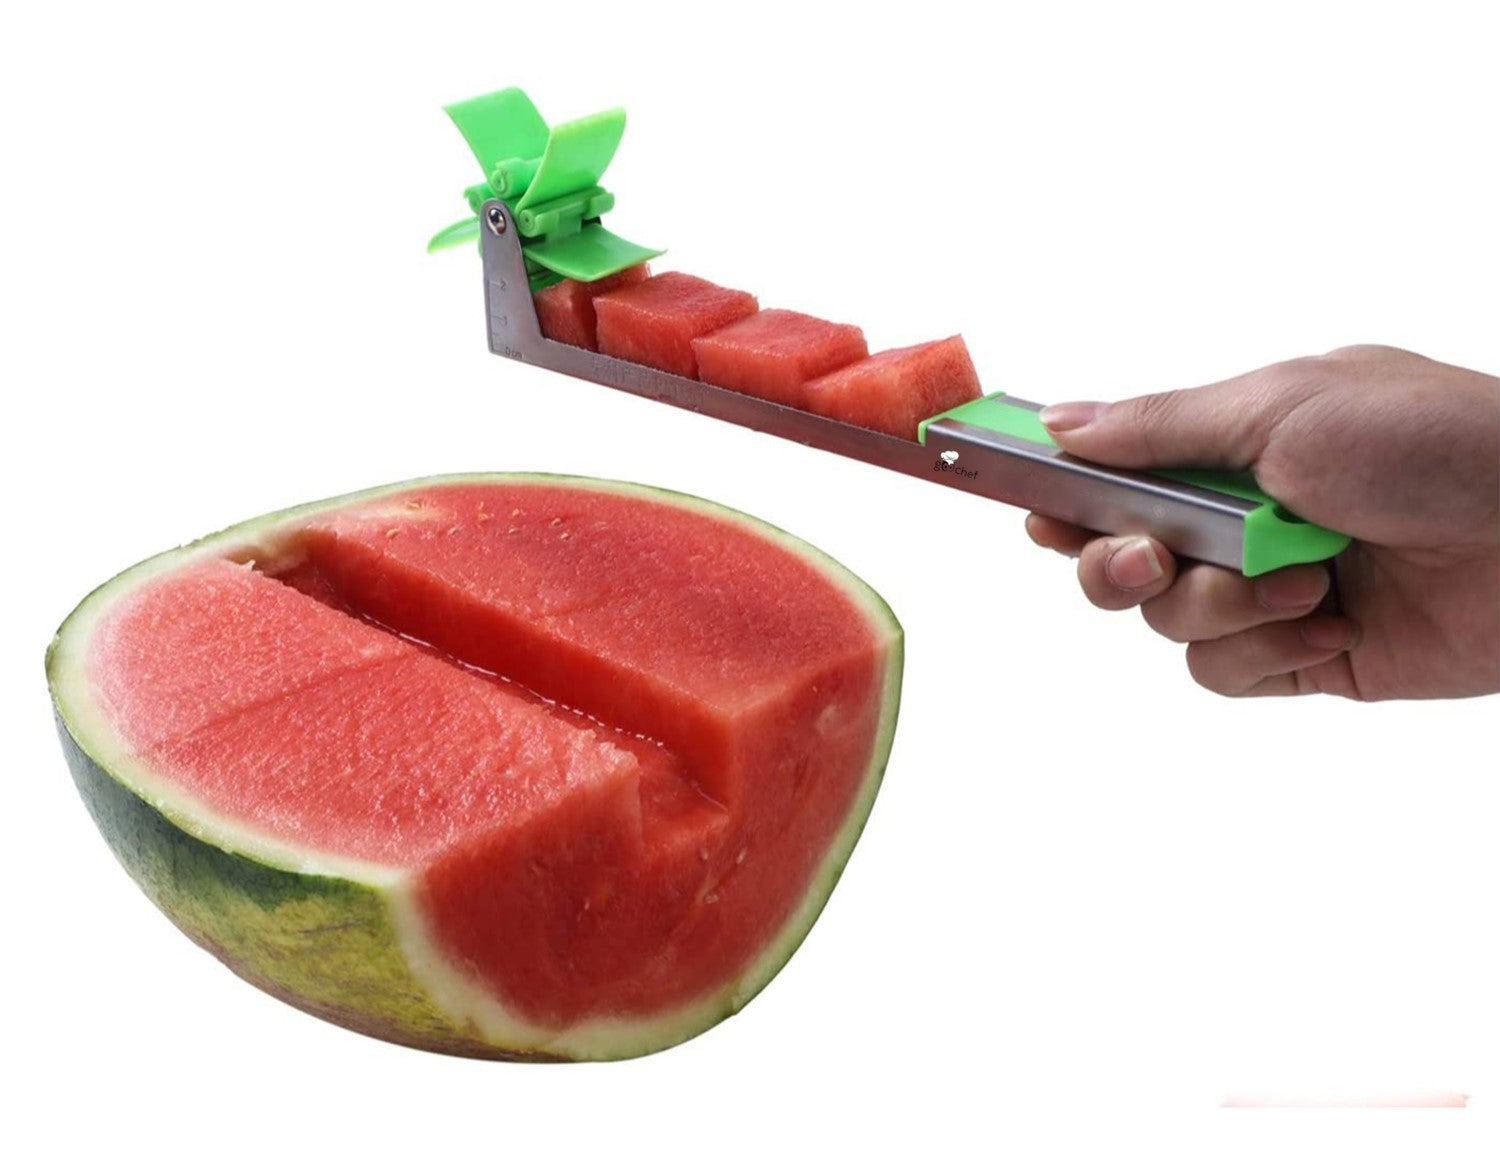 Chef'n Slicester Watermelon Slicer in Green